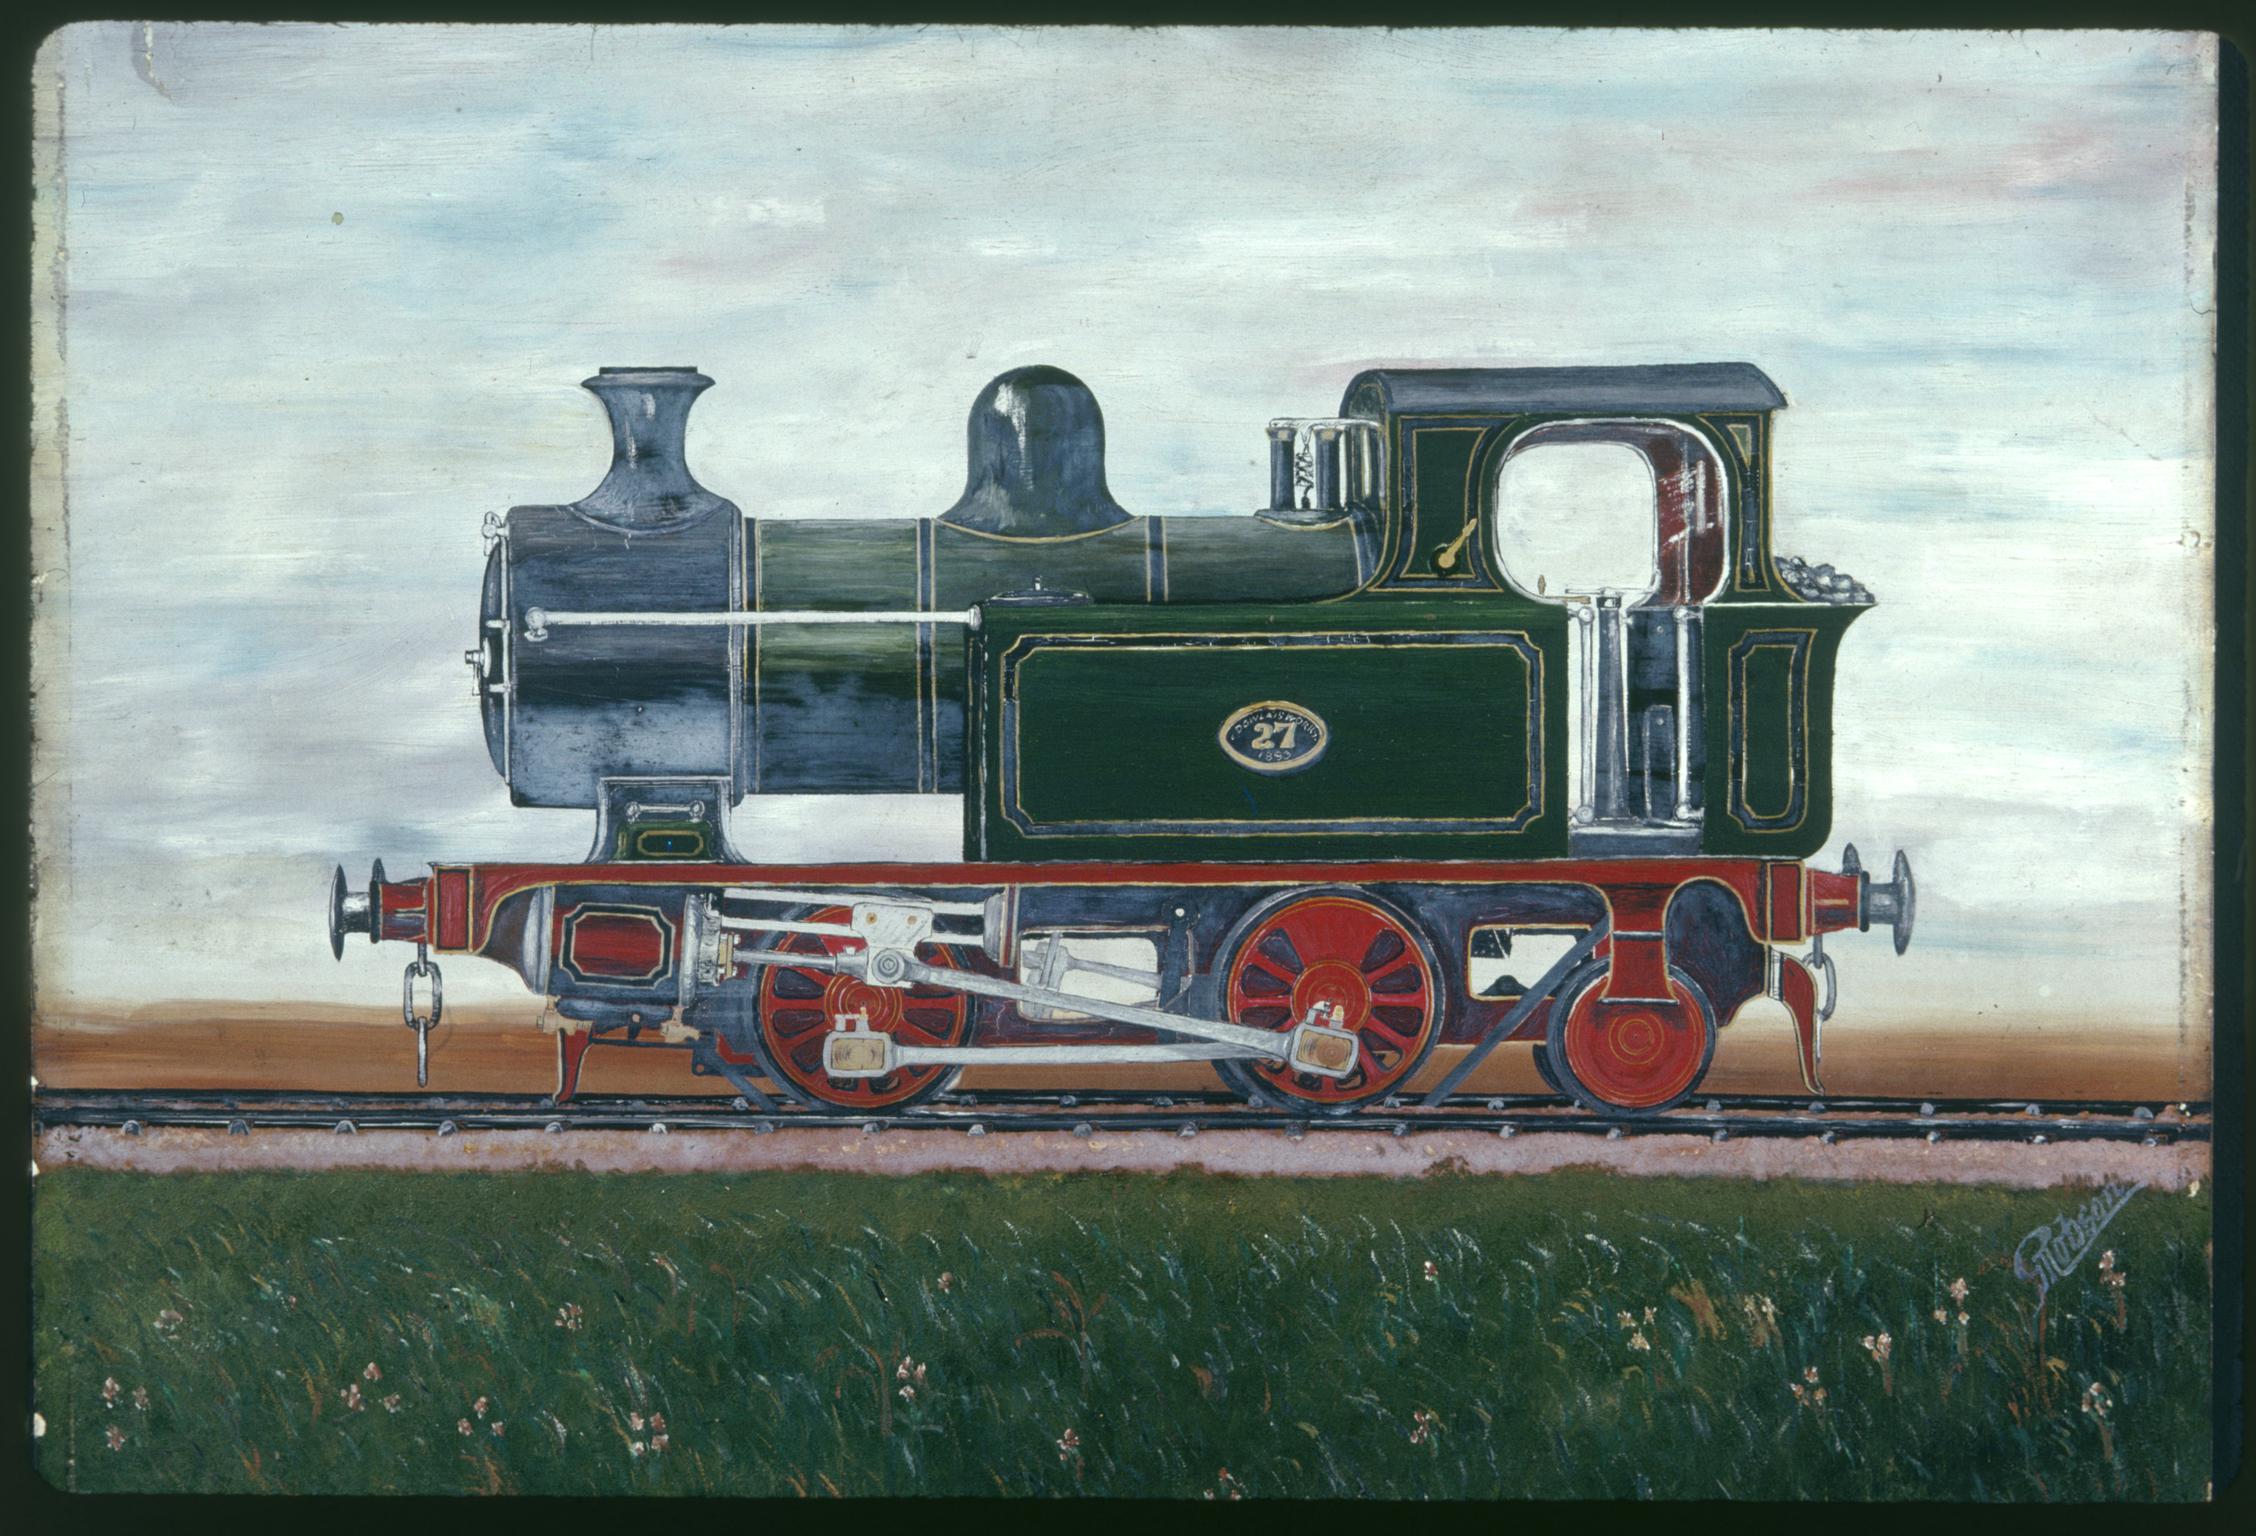 Locomotive No '27' (painting)